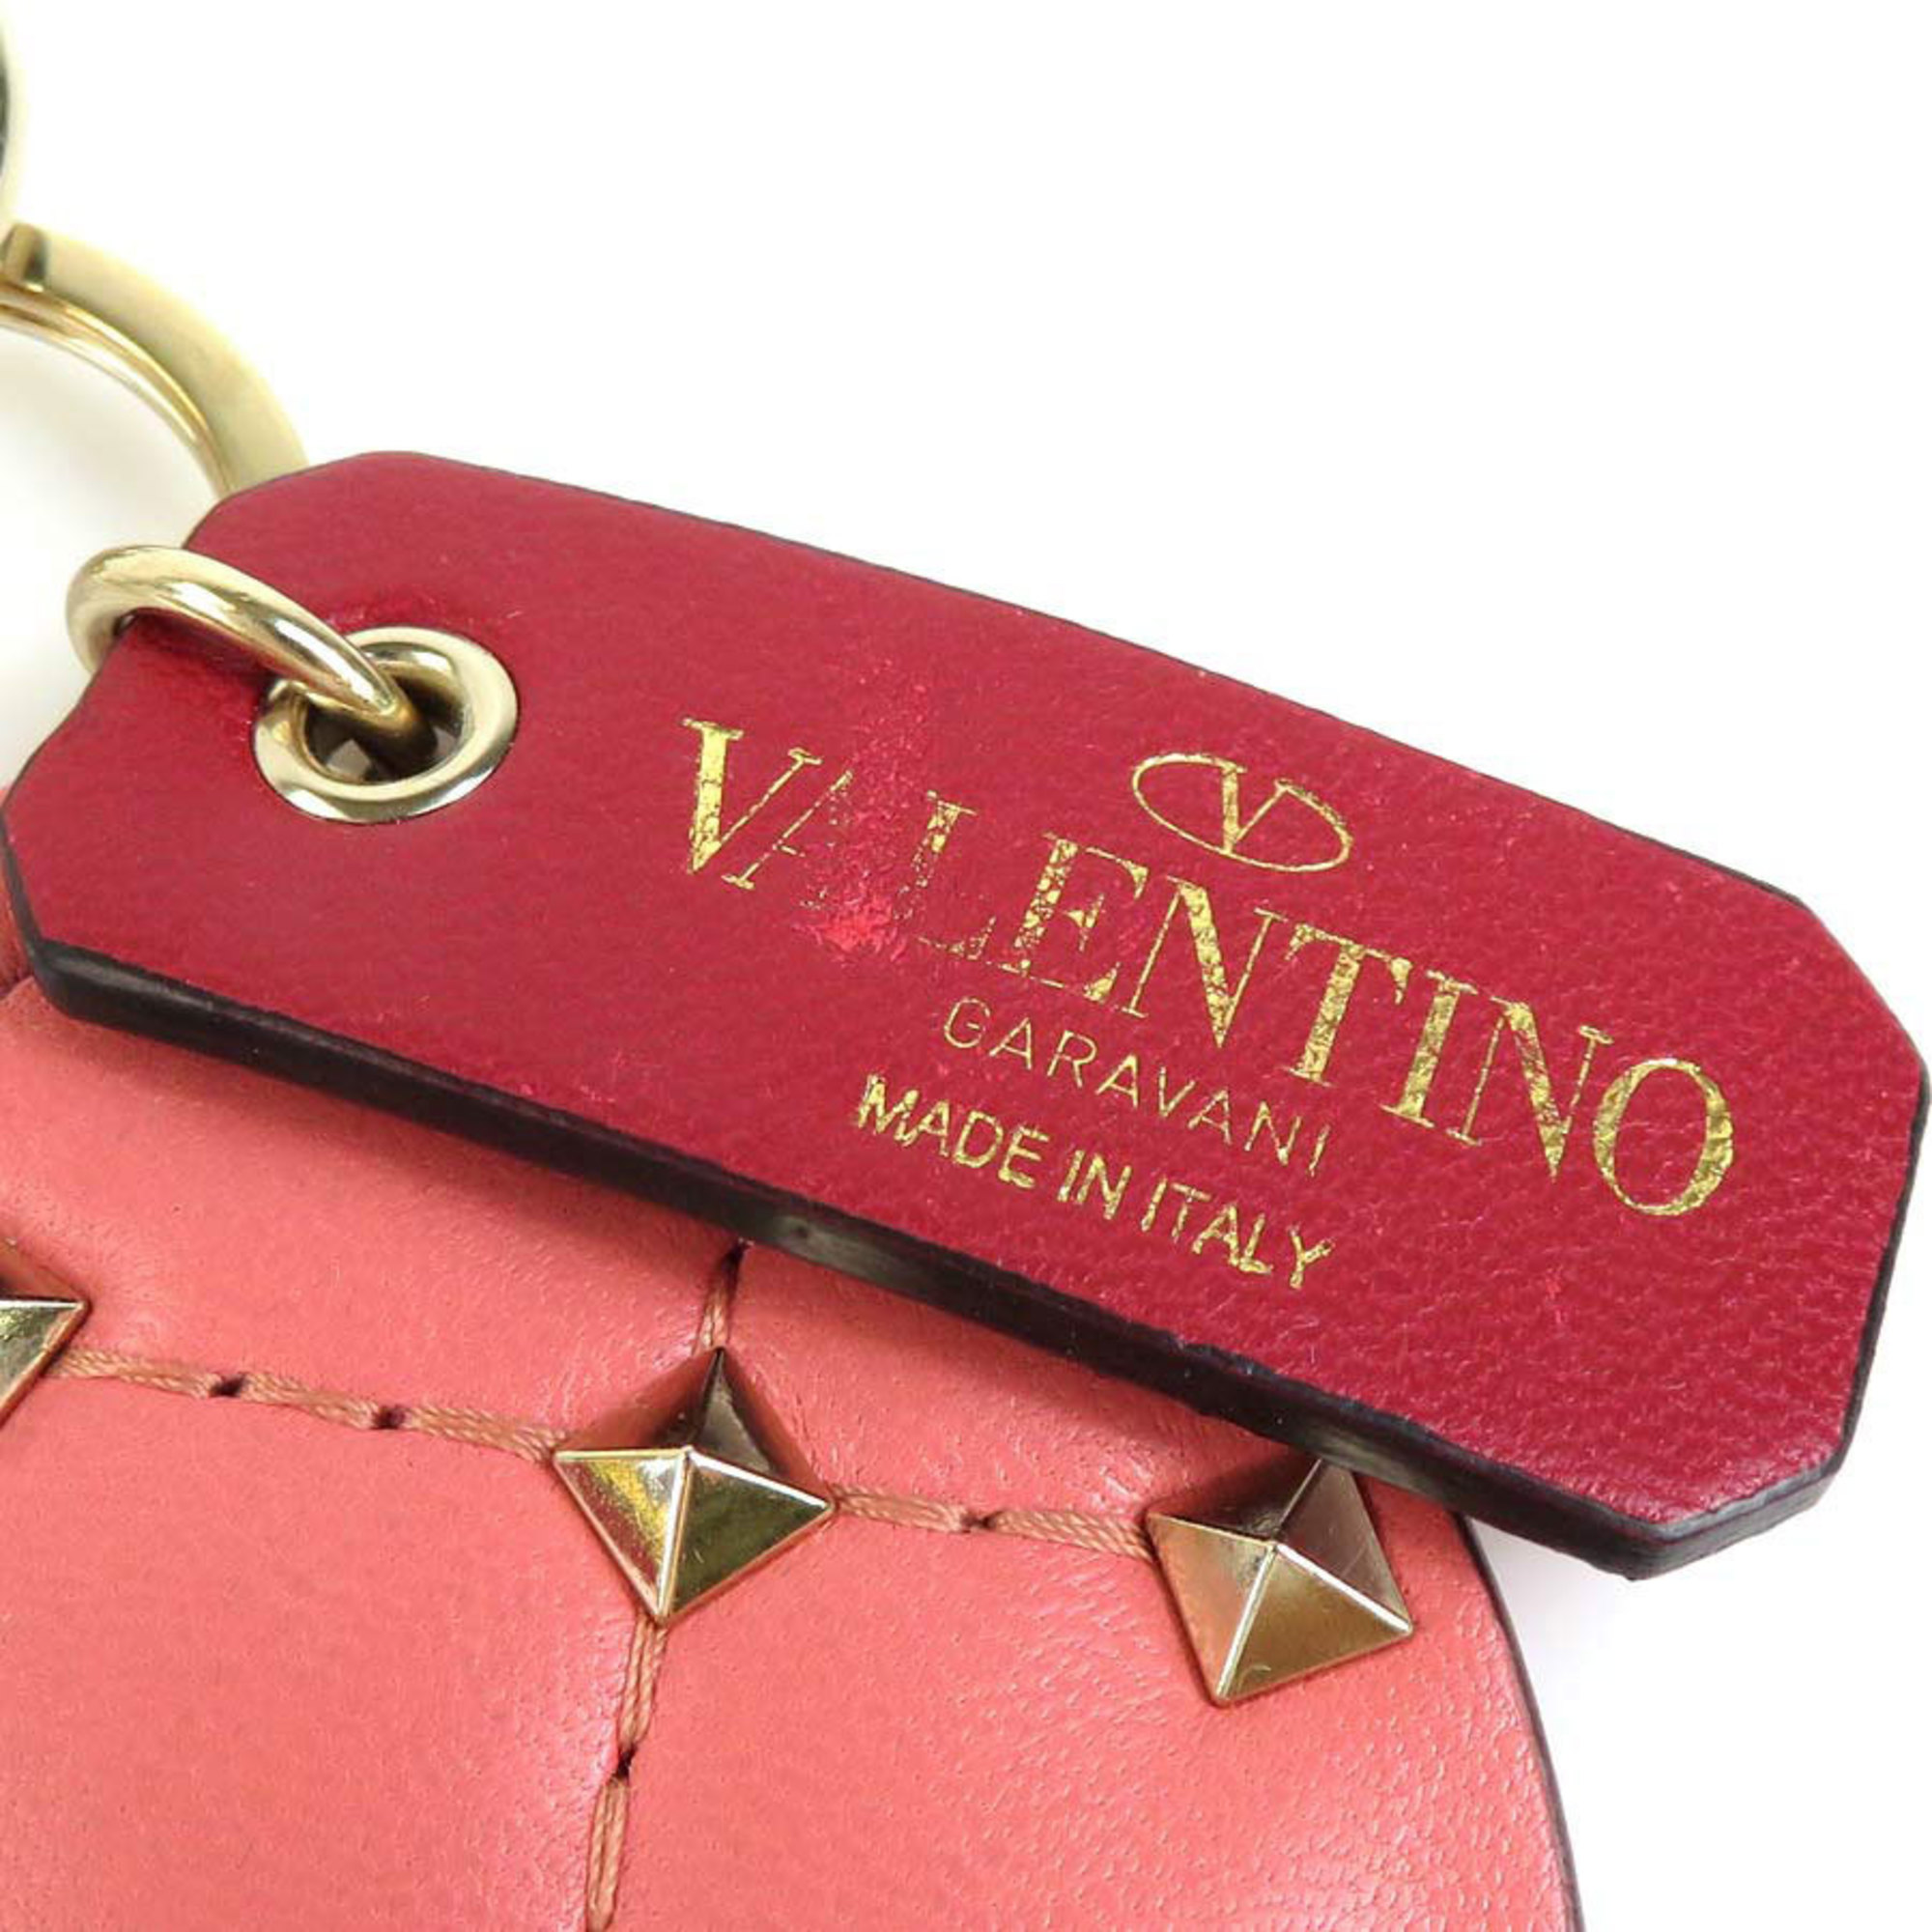 Valentino Garavani charm leather pink ladies